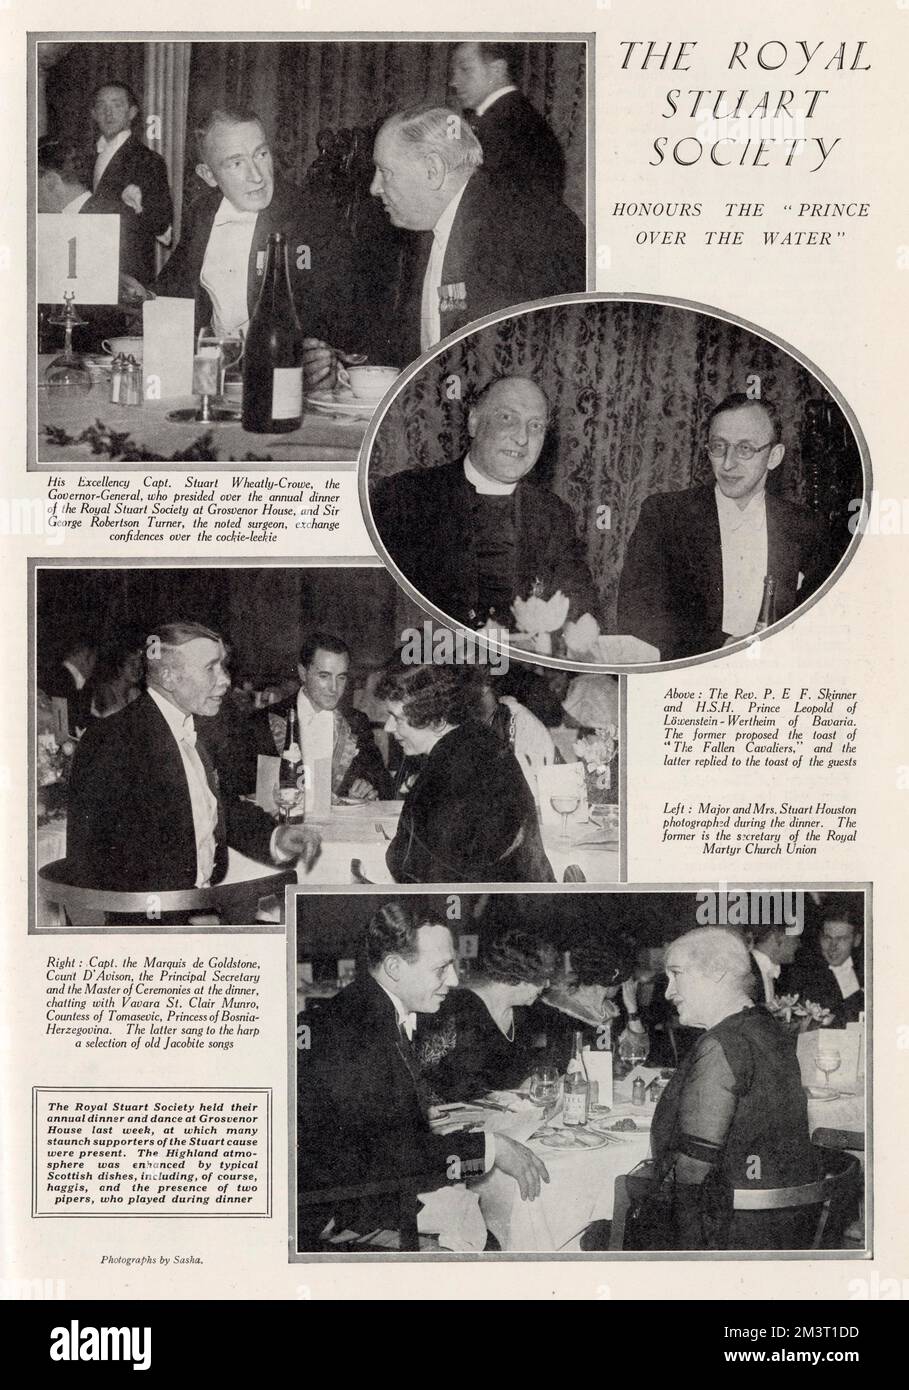 Annual dinner of the Royal Stuart Society at the Grosvenor House Hotel. Stock Photo